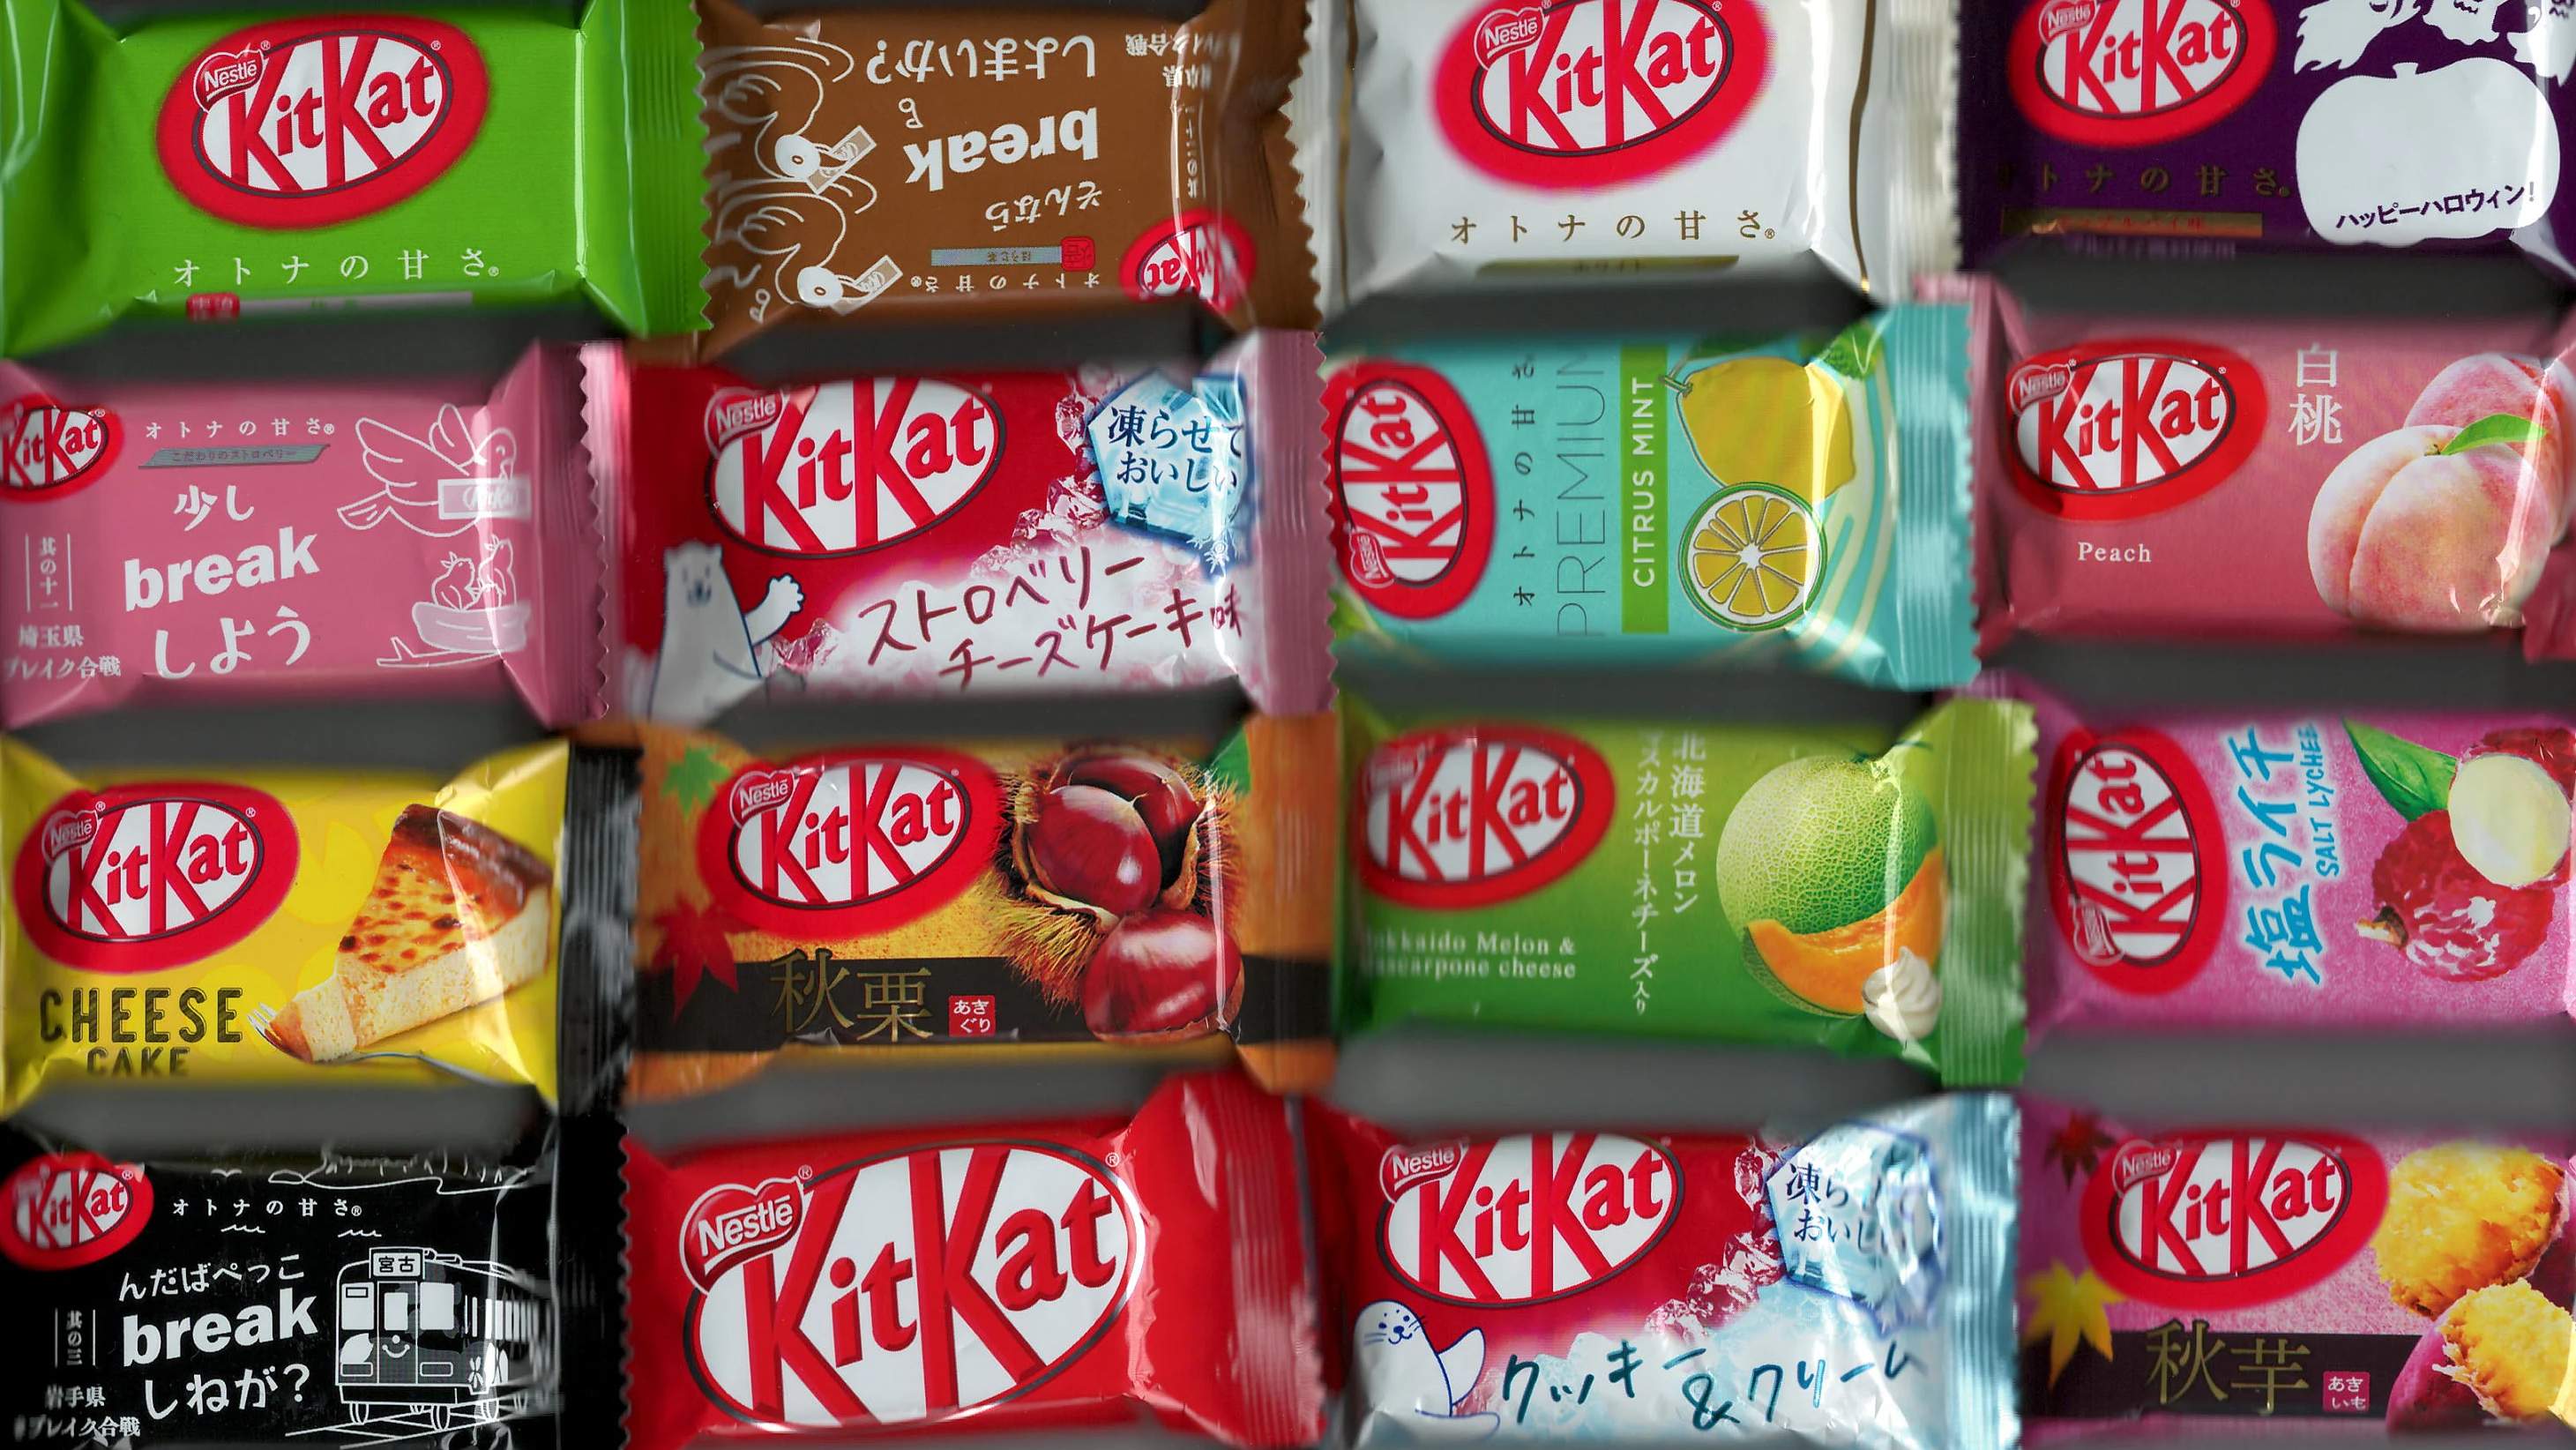 KitKat Japan products